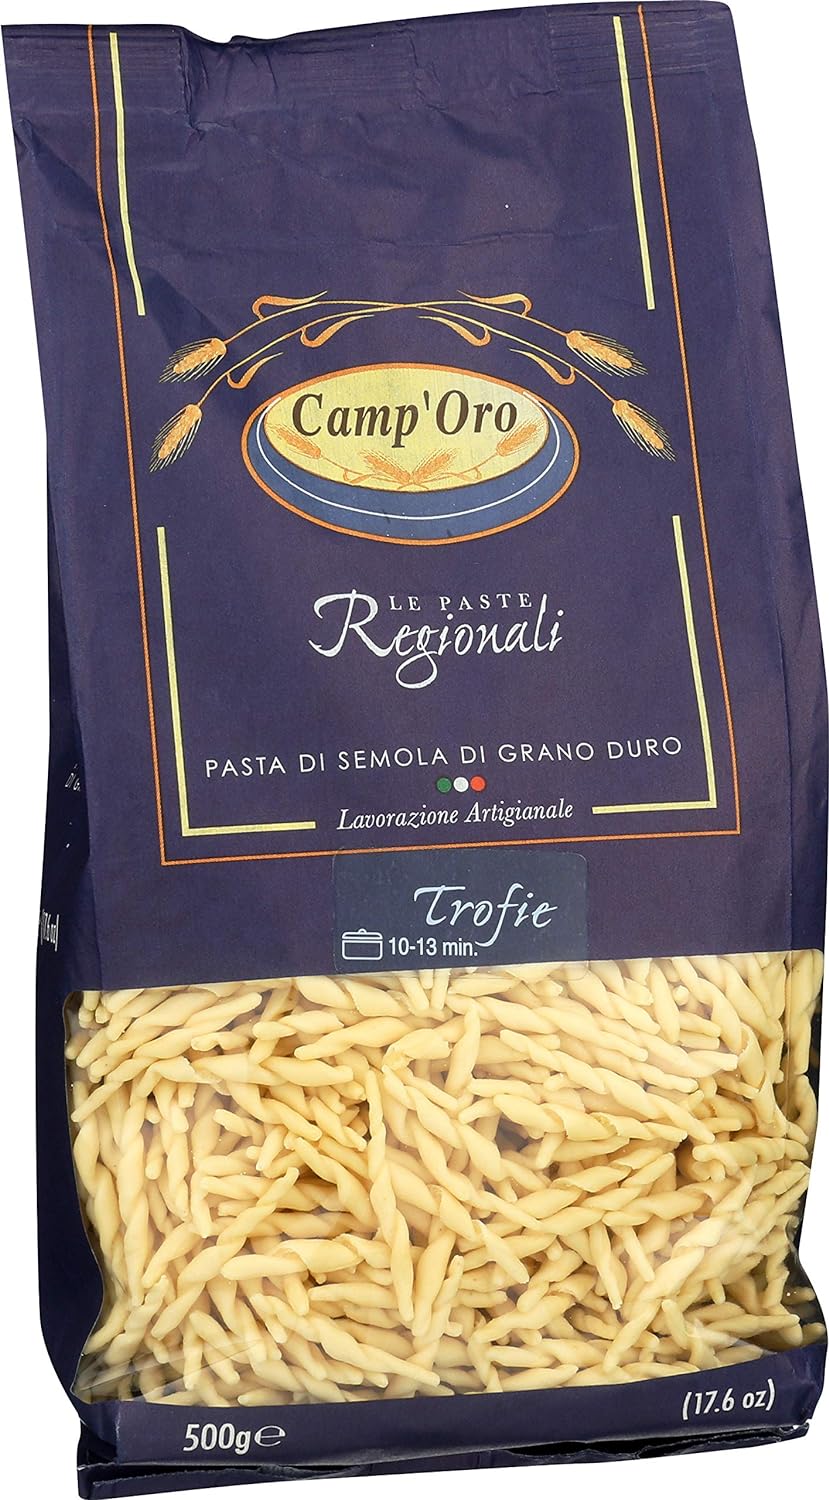 Camp'Oro Le Regionali Delicate Trofie Pasta Pack of 16 (16 Ounce) Bag : Grocery & Gourmet Food